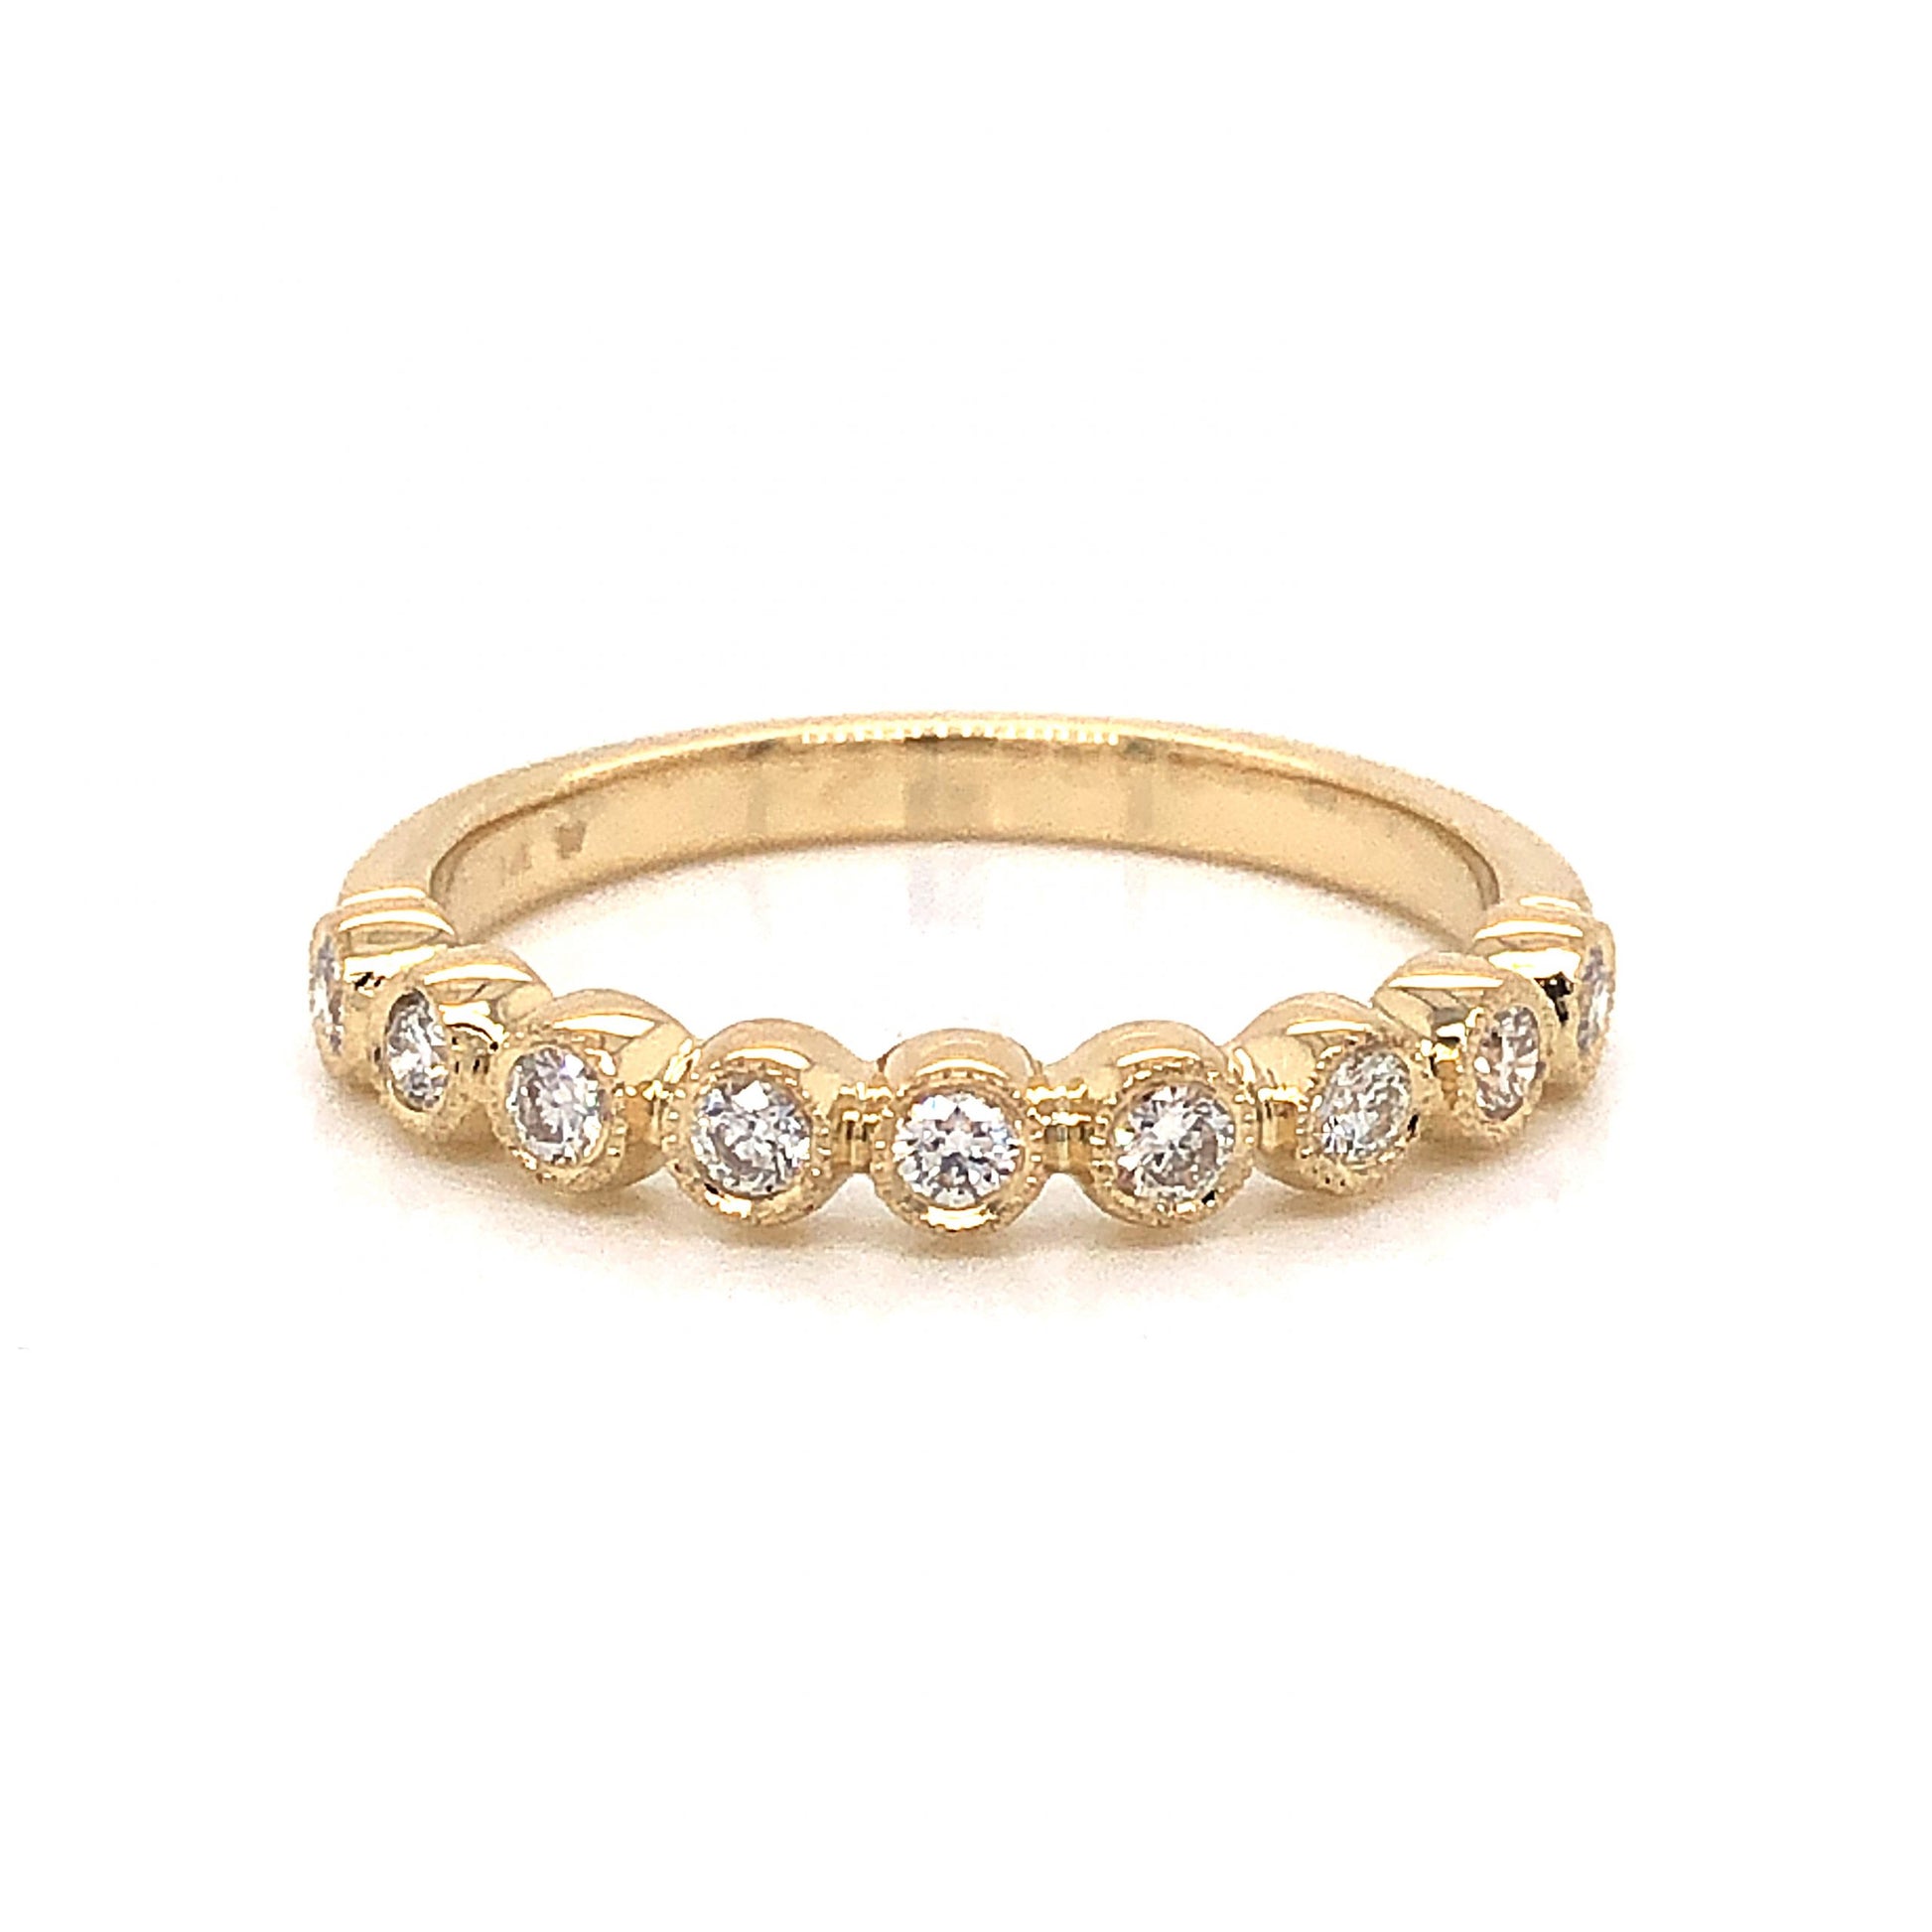 .24 Bezel Set Diamond Wedding Band in 14k Yellow GoldComposition: 14 Karat Yellow Gold Ring Size: 6.5 Total Diamond Weight: .24ct Total Gram Weight: 2.2 g Inscription: 14k
      